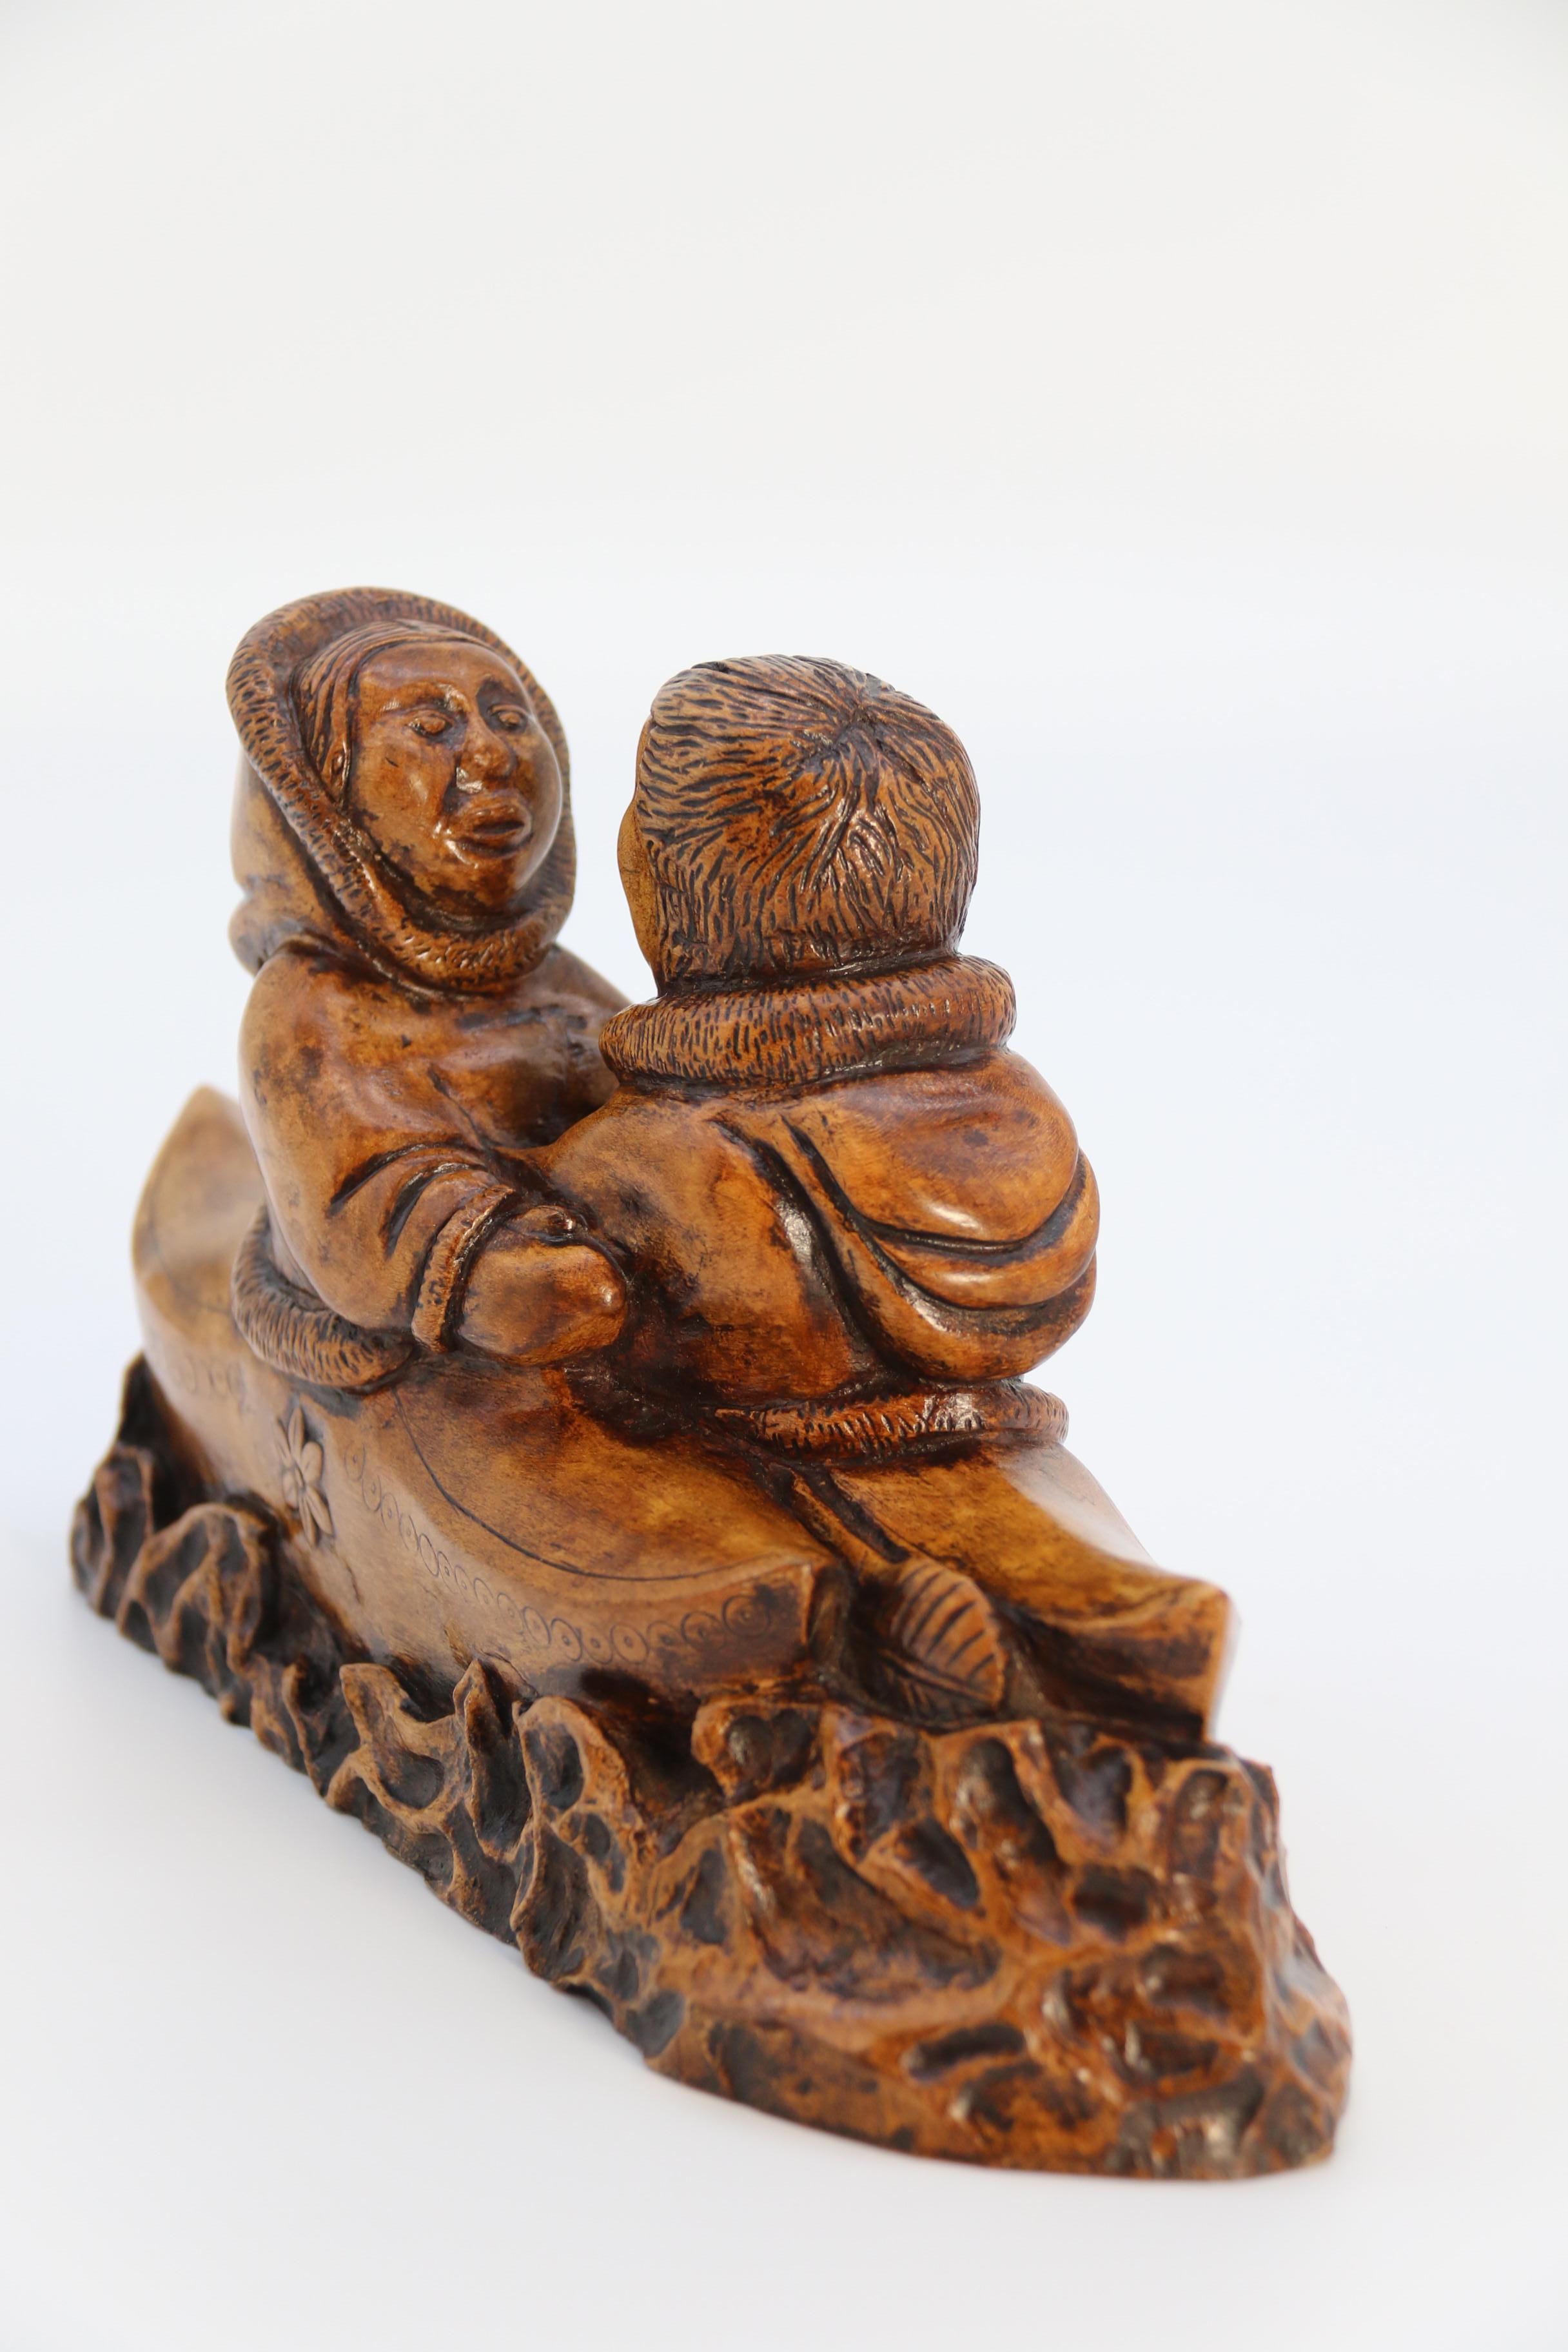 Folk Art An early 20th century Canadian folk art maple wood carved Inuit figure group For Sale